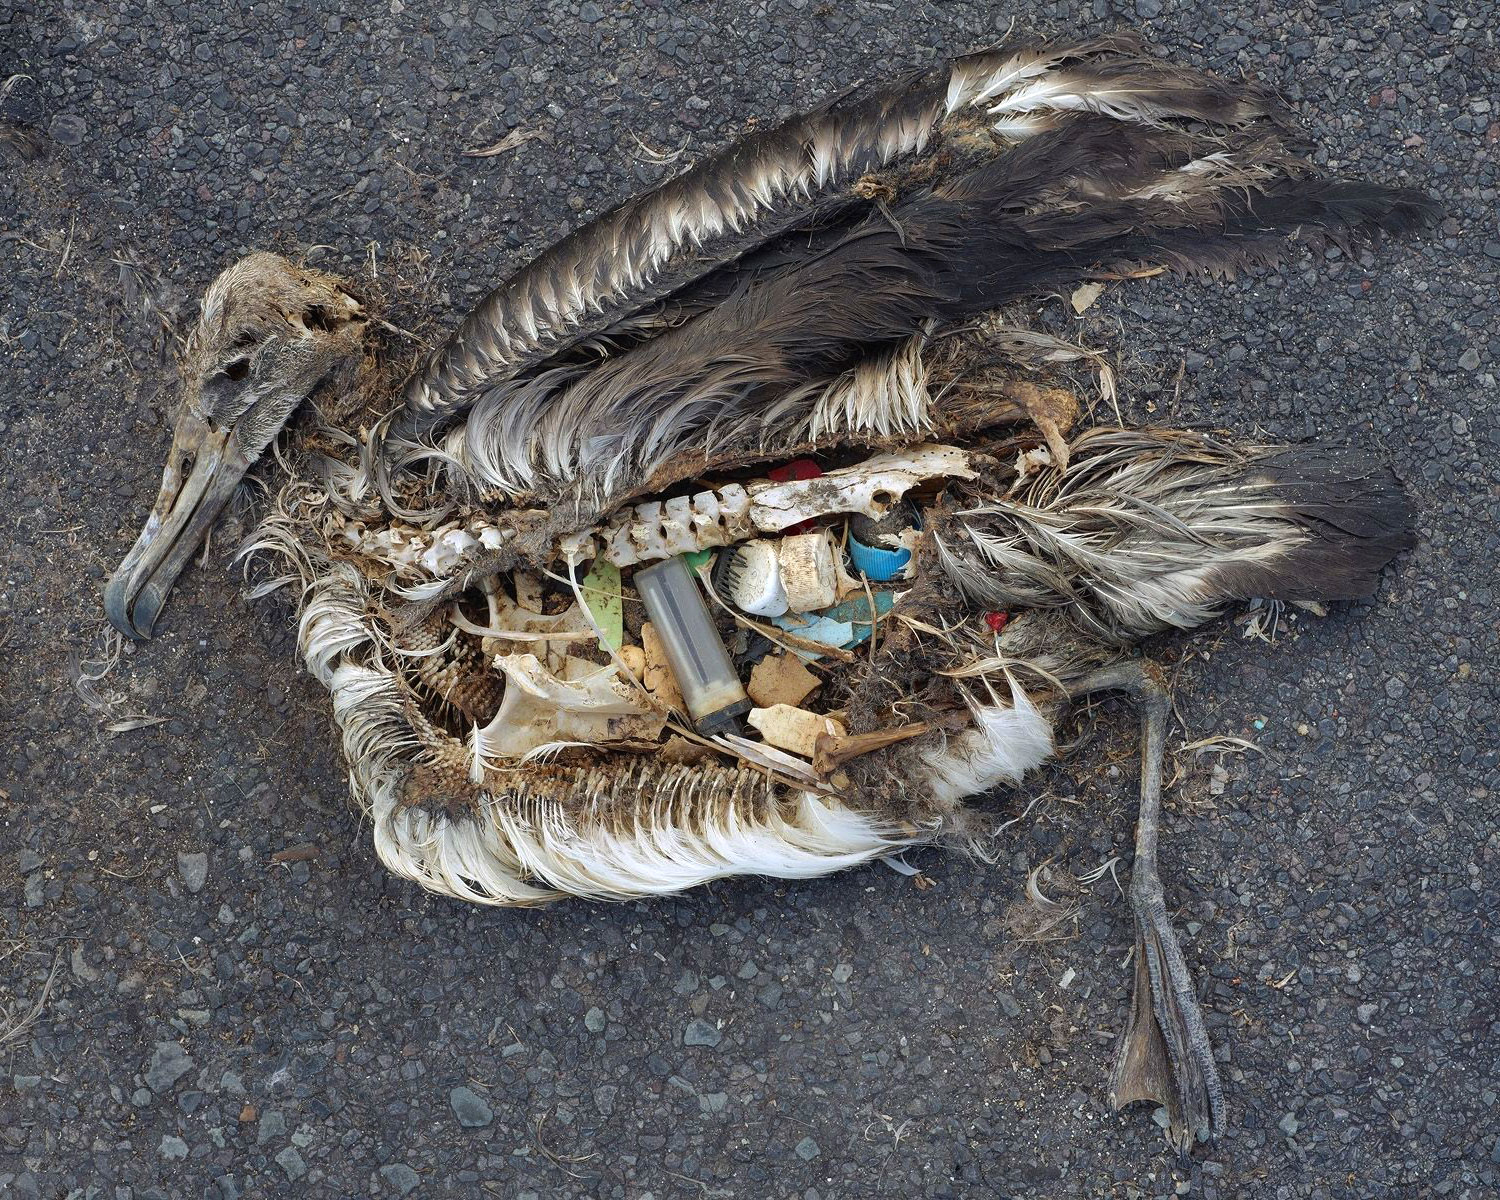 Deab Albatross filled with random trash he had eaten